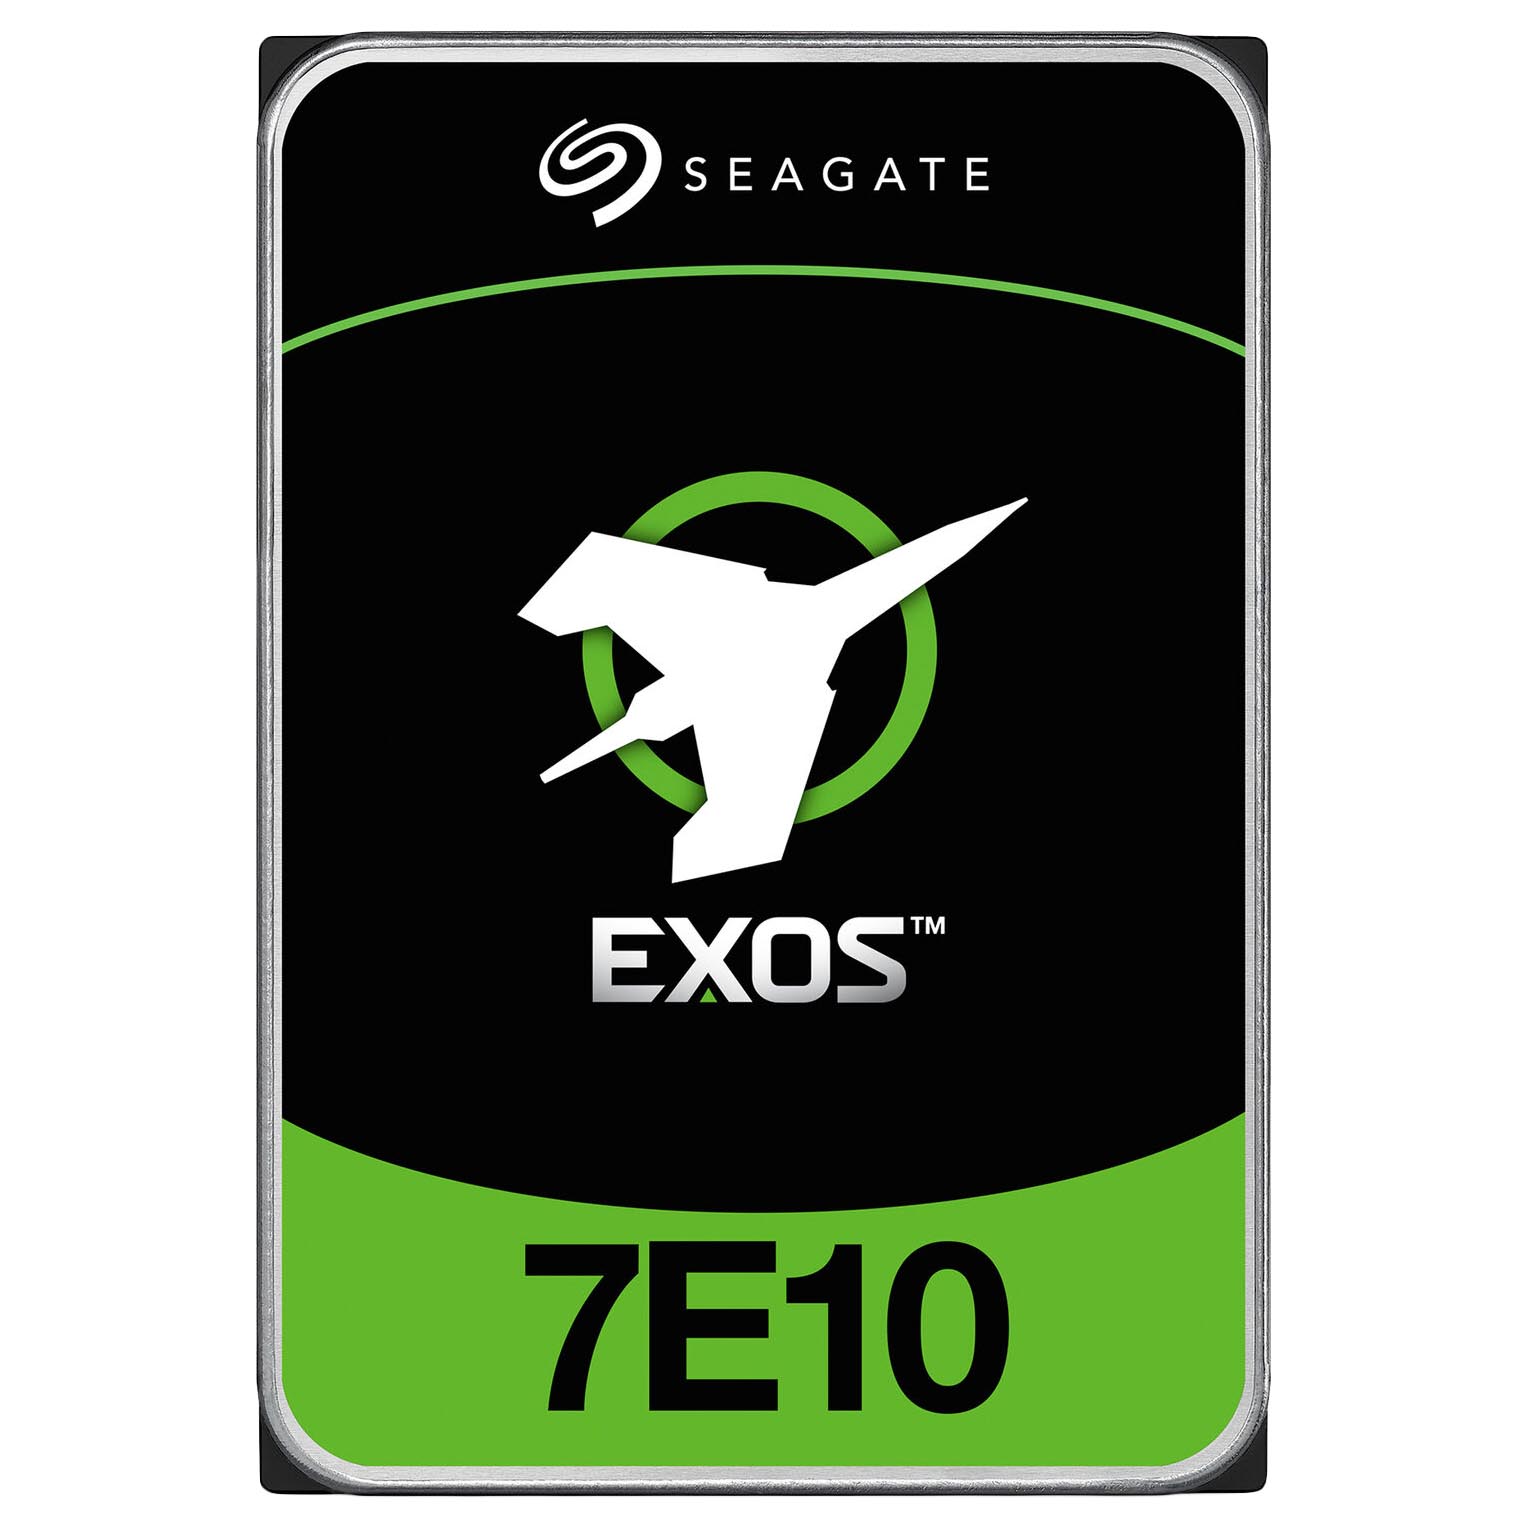 Внутренний жесткий диск Seagate Exos 7E10, ST10000NM017B, 10 Тб жесткий диск seagate exos x16 10 тб 3 5 st10000nm002g